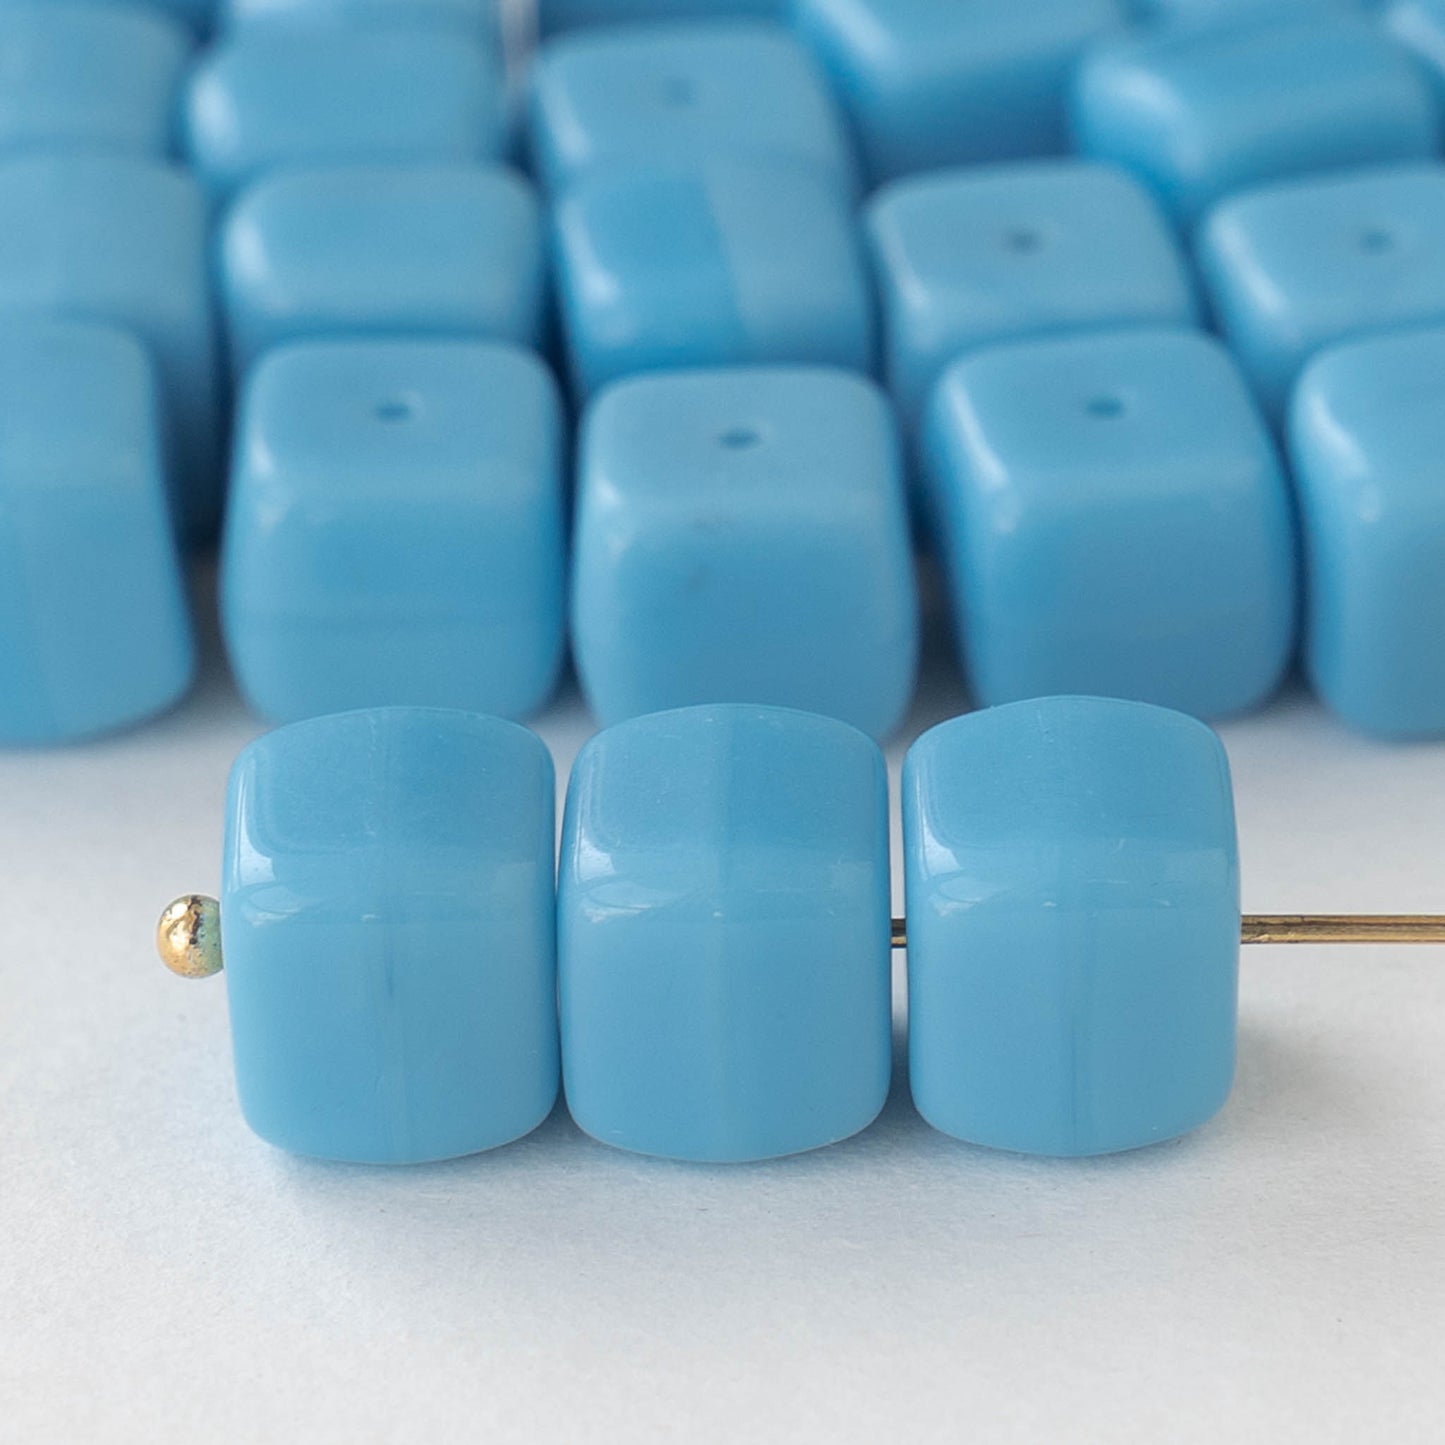 9x11mm Glass Cube Beads - Opaque Blue - 20 Beads